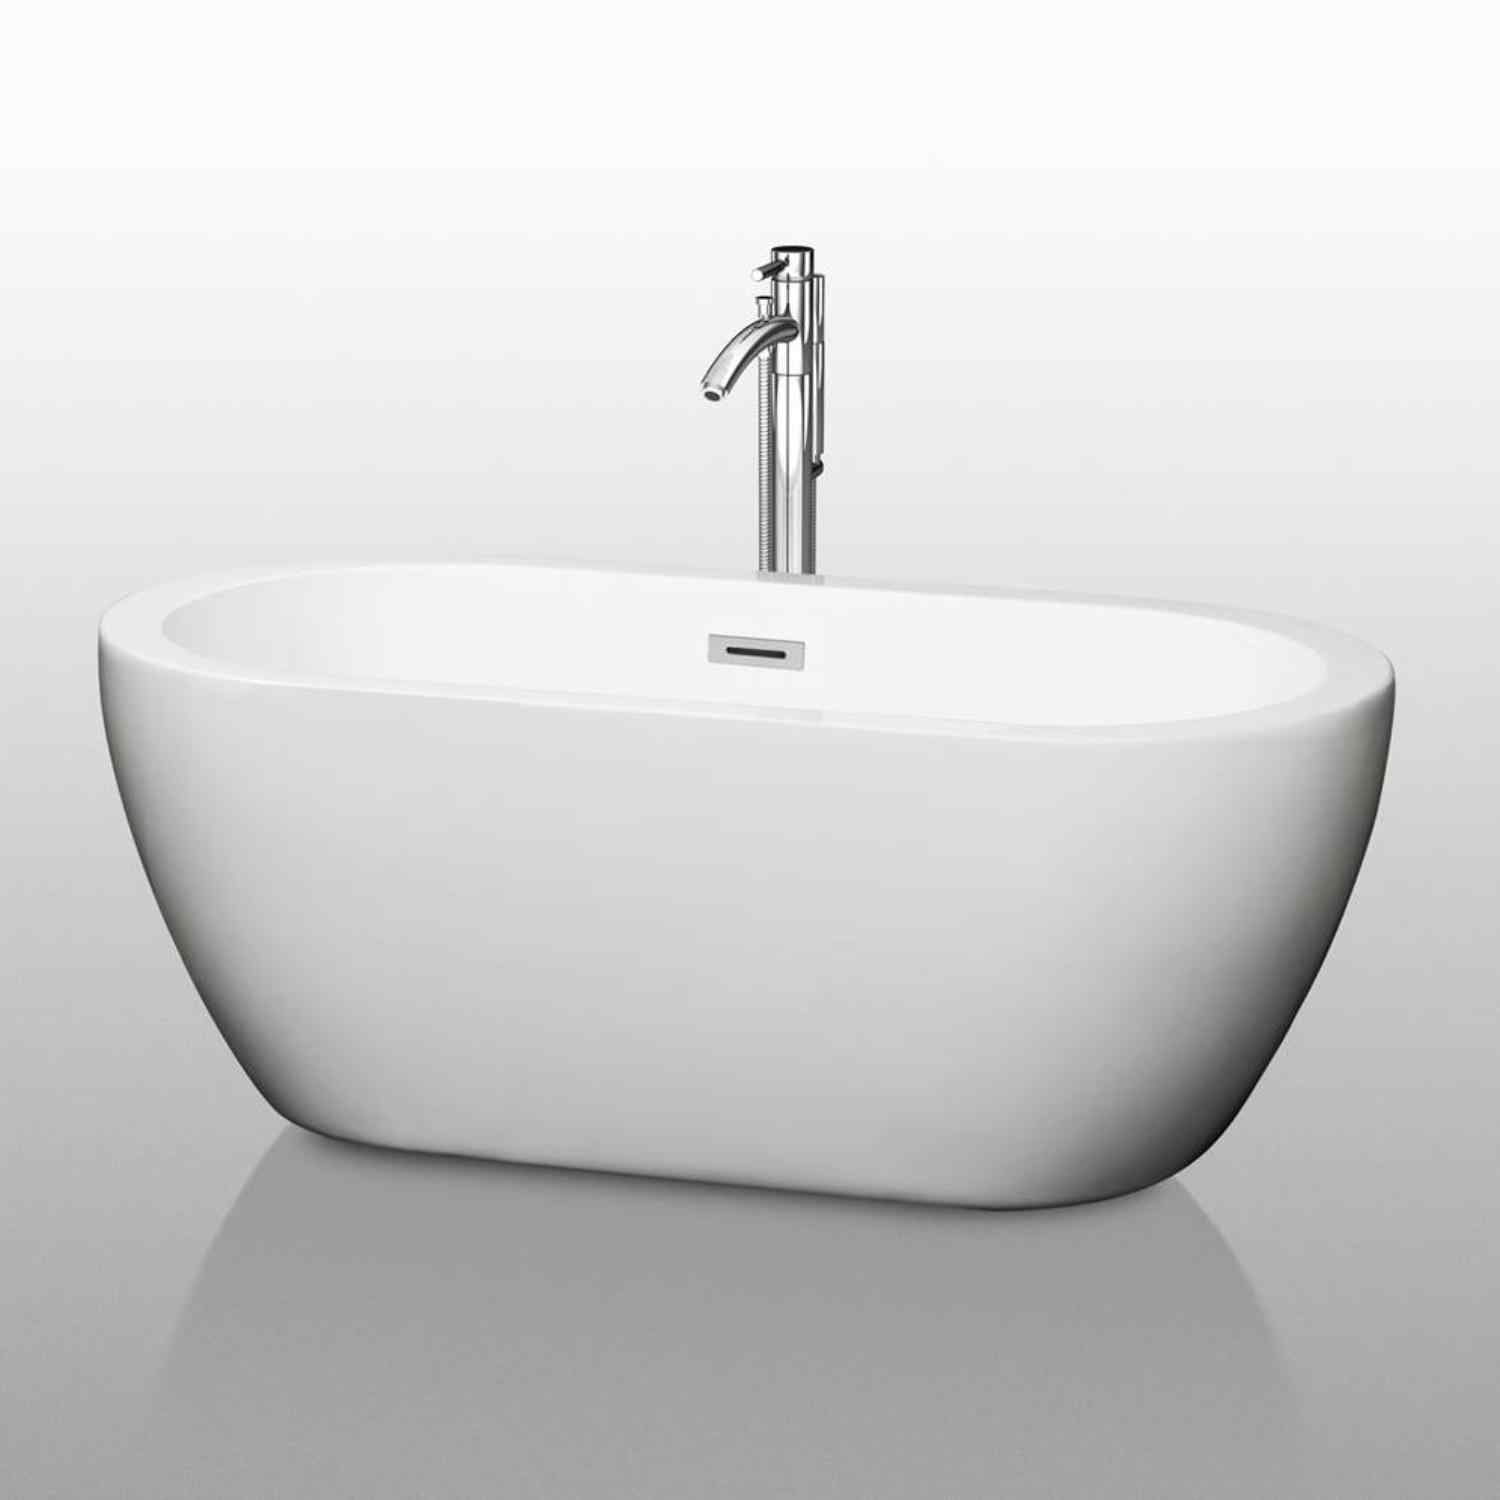 Wyndham collection Soho 60 Inch Freestanding Bathtub in White polished